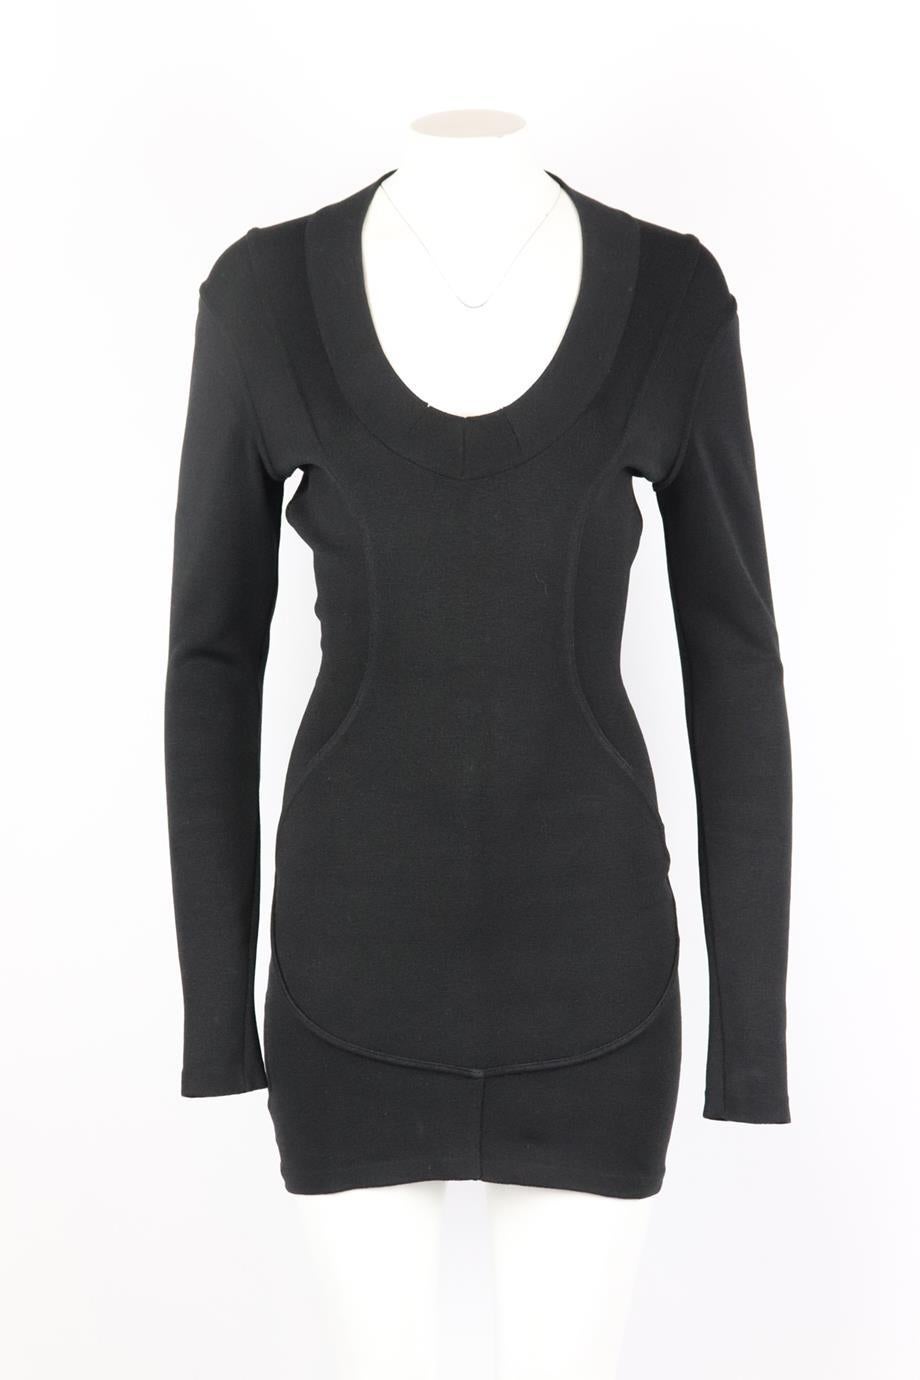 Azzedine Alaïa vintage stretch knit mini dress. Black. Long sleeve, scoop neck. Slips on. 86% Wool, 10% nylon, 1% elastane. Size: XSmall (UK 6, US 2, FR 34, IT 38). Bust: 35.5 in. Waist: 24 in. Hips: 31 in. Length: 31.6 in. Good condition - Marks on